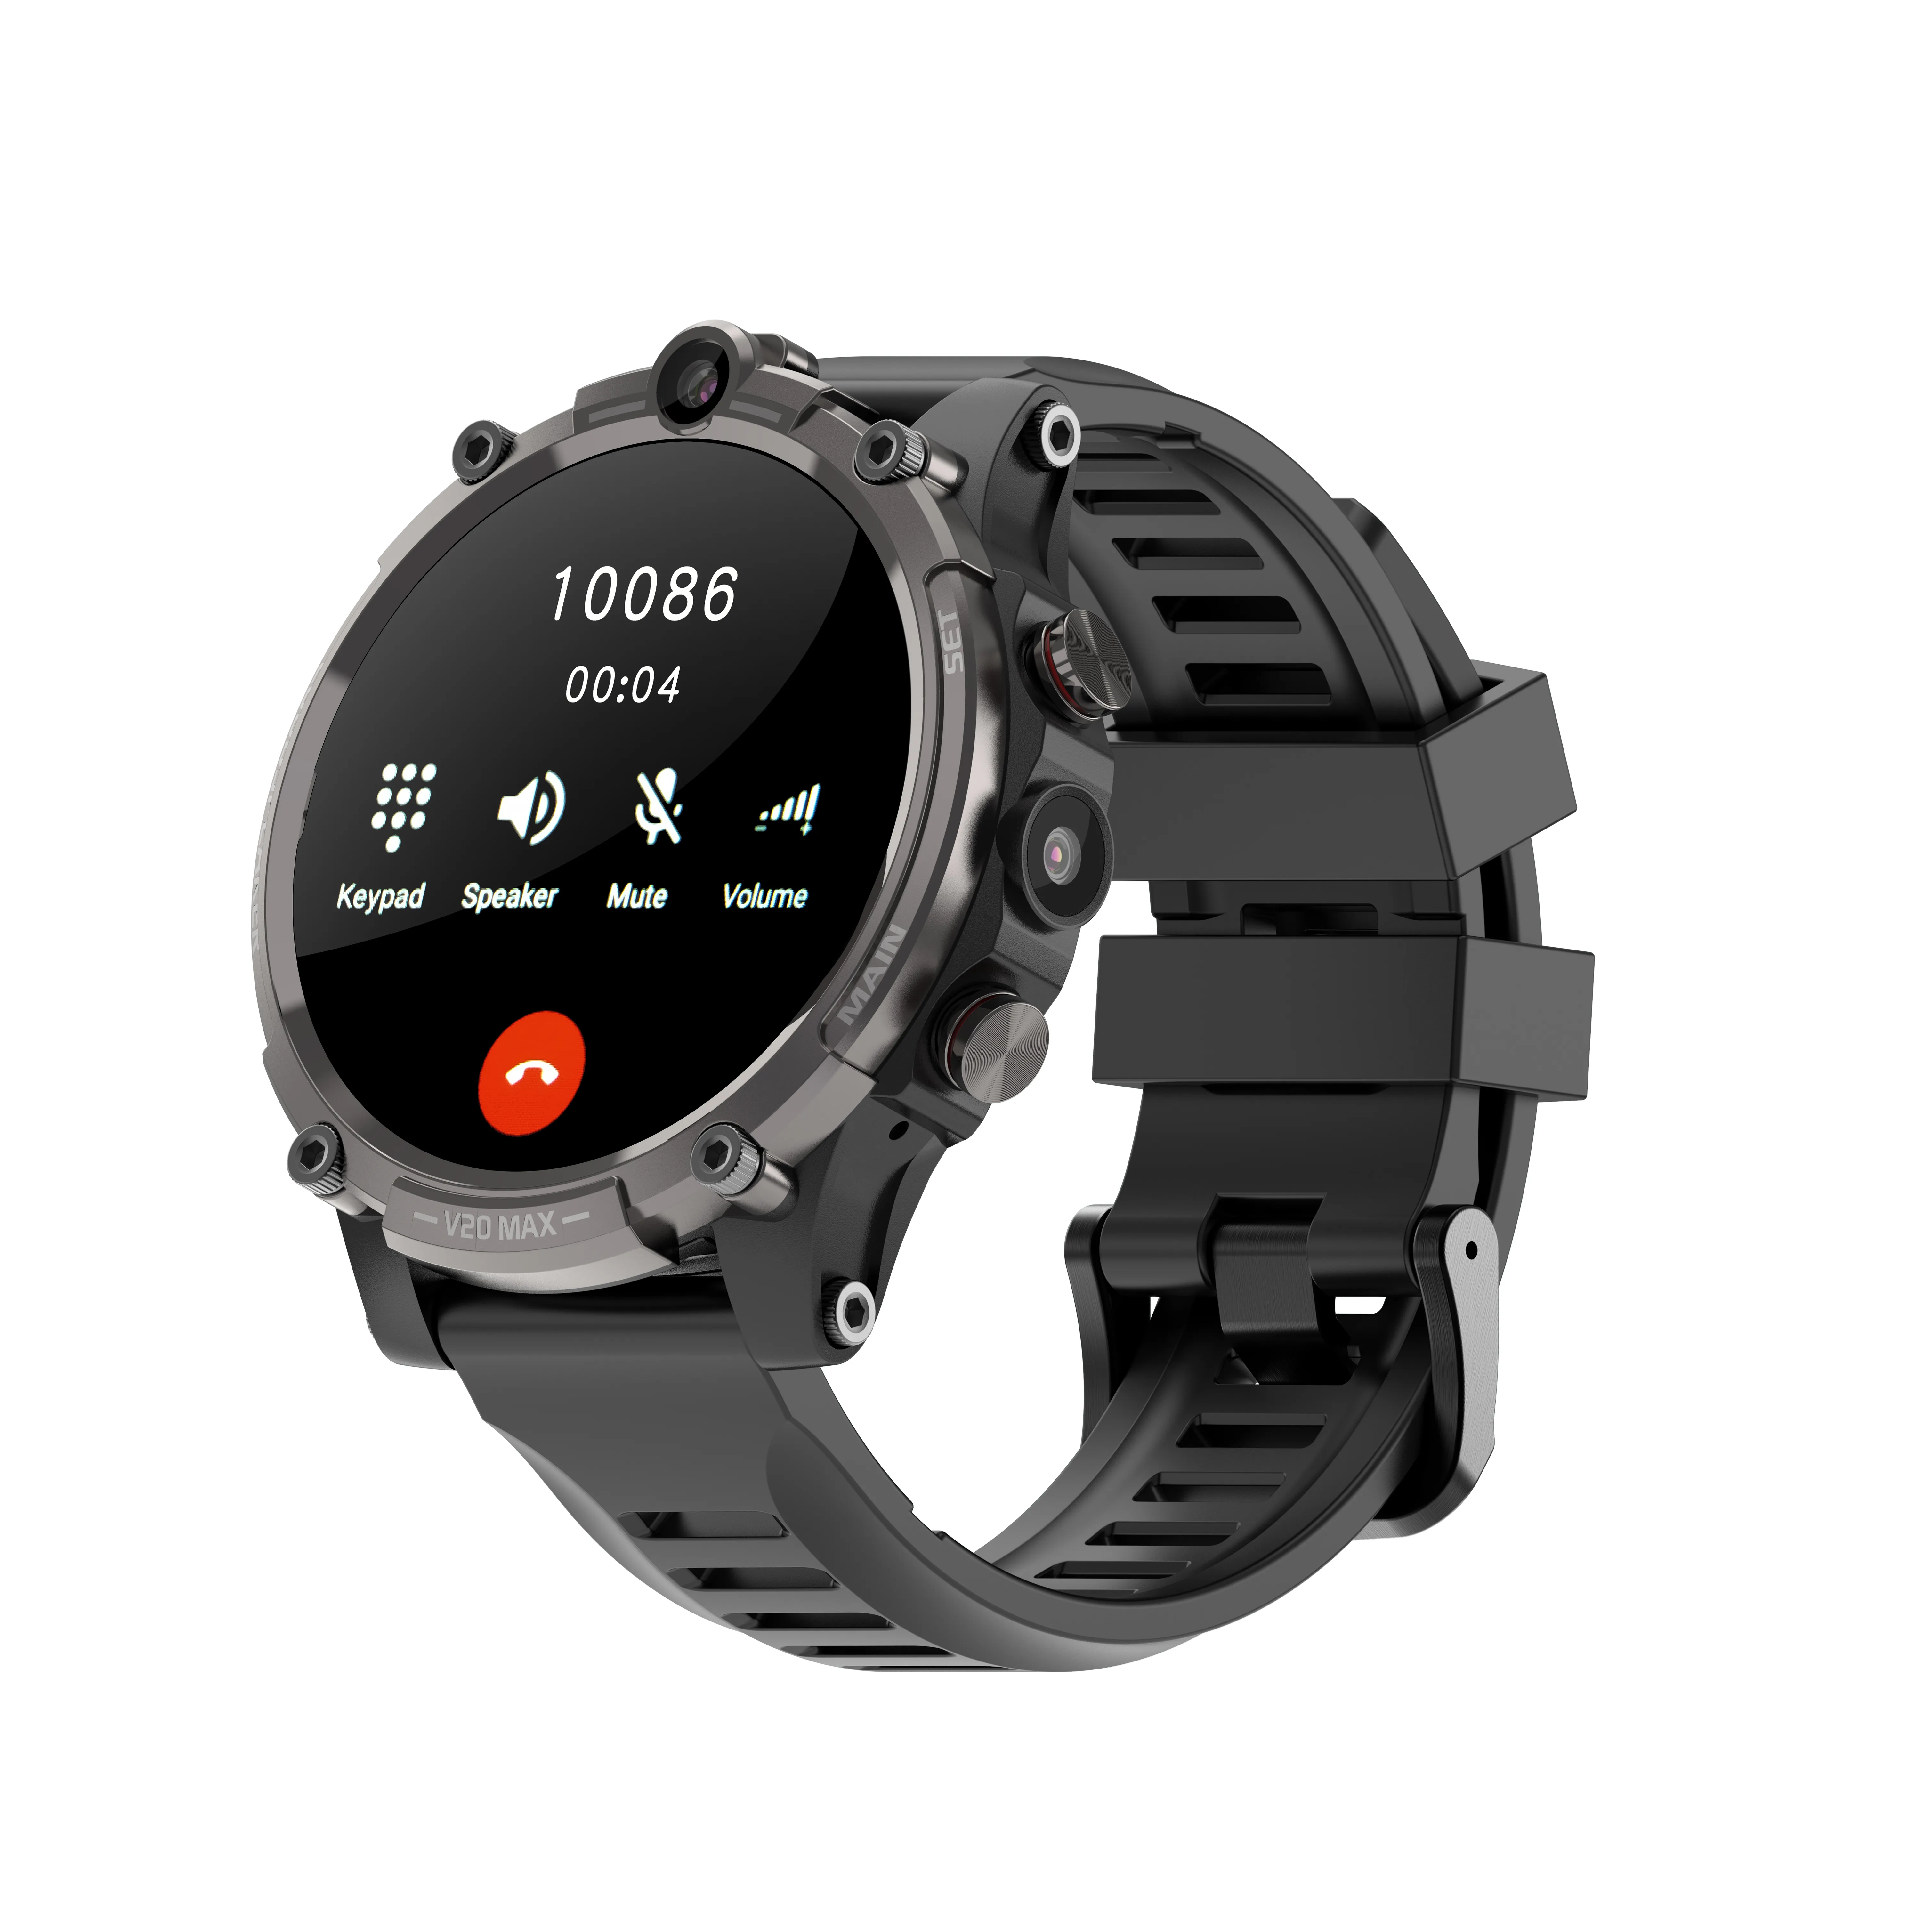 4G LTE Cellulari SIM Card Smart Watch Fitness Tracker Sport IP68 Impermeabile Frequenza cardiaca Pressione sanguigna GPS Smartwatch IOS Orologi per telefoni Android 128 GB Fotocamere da 2 MP